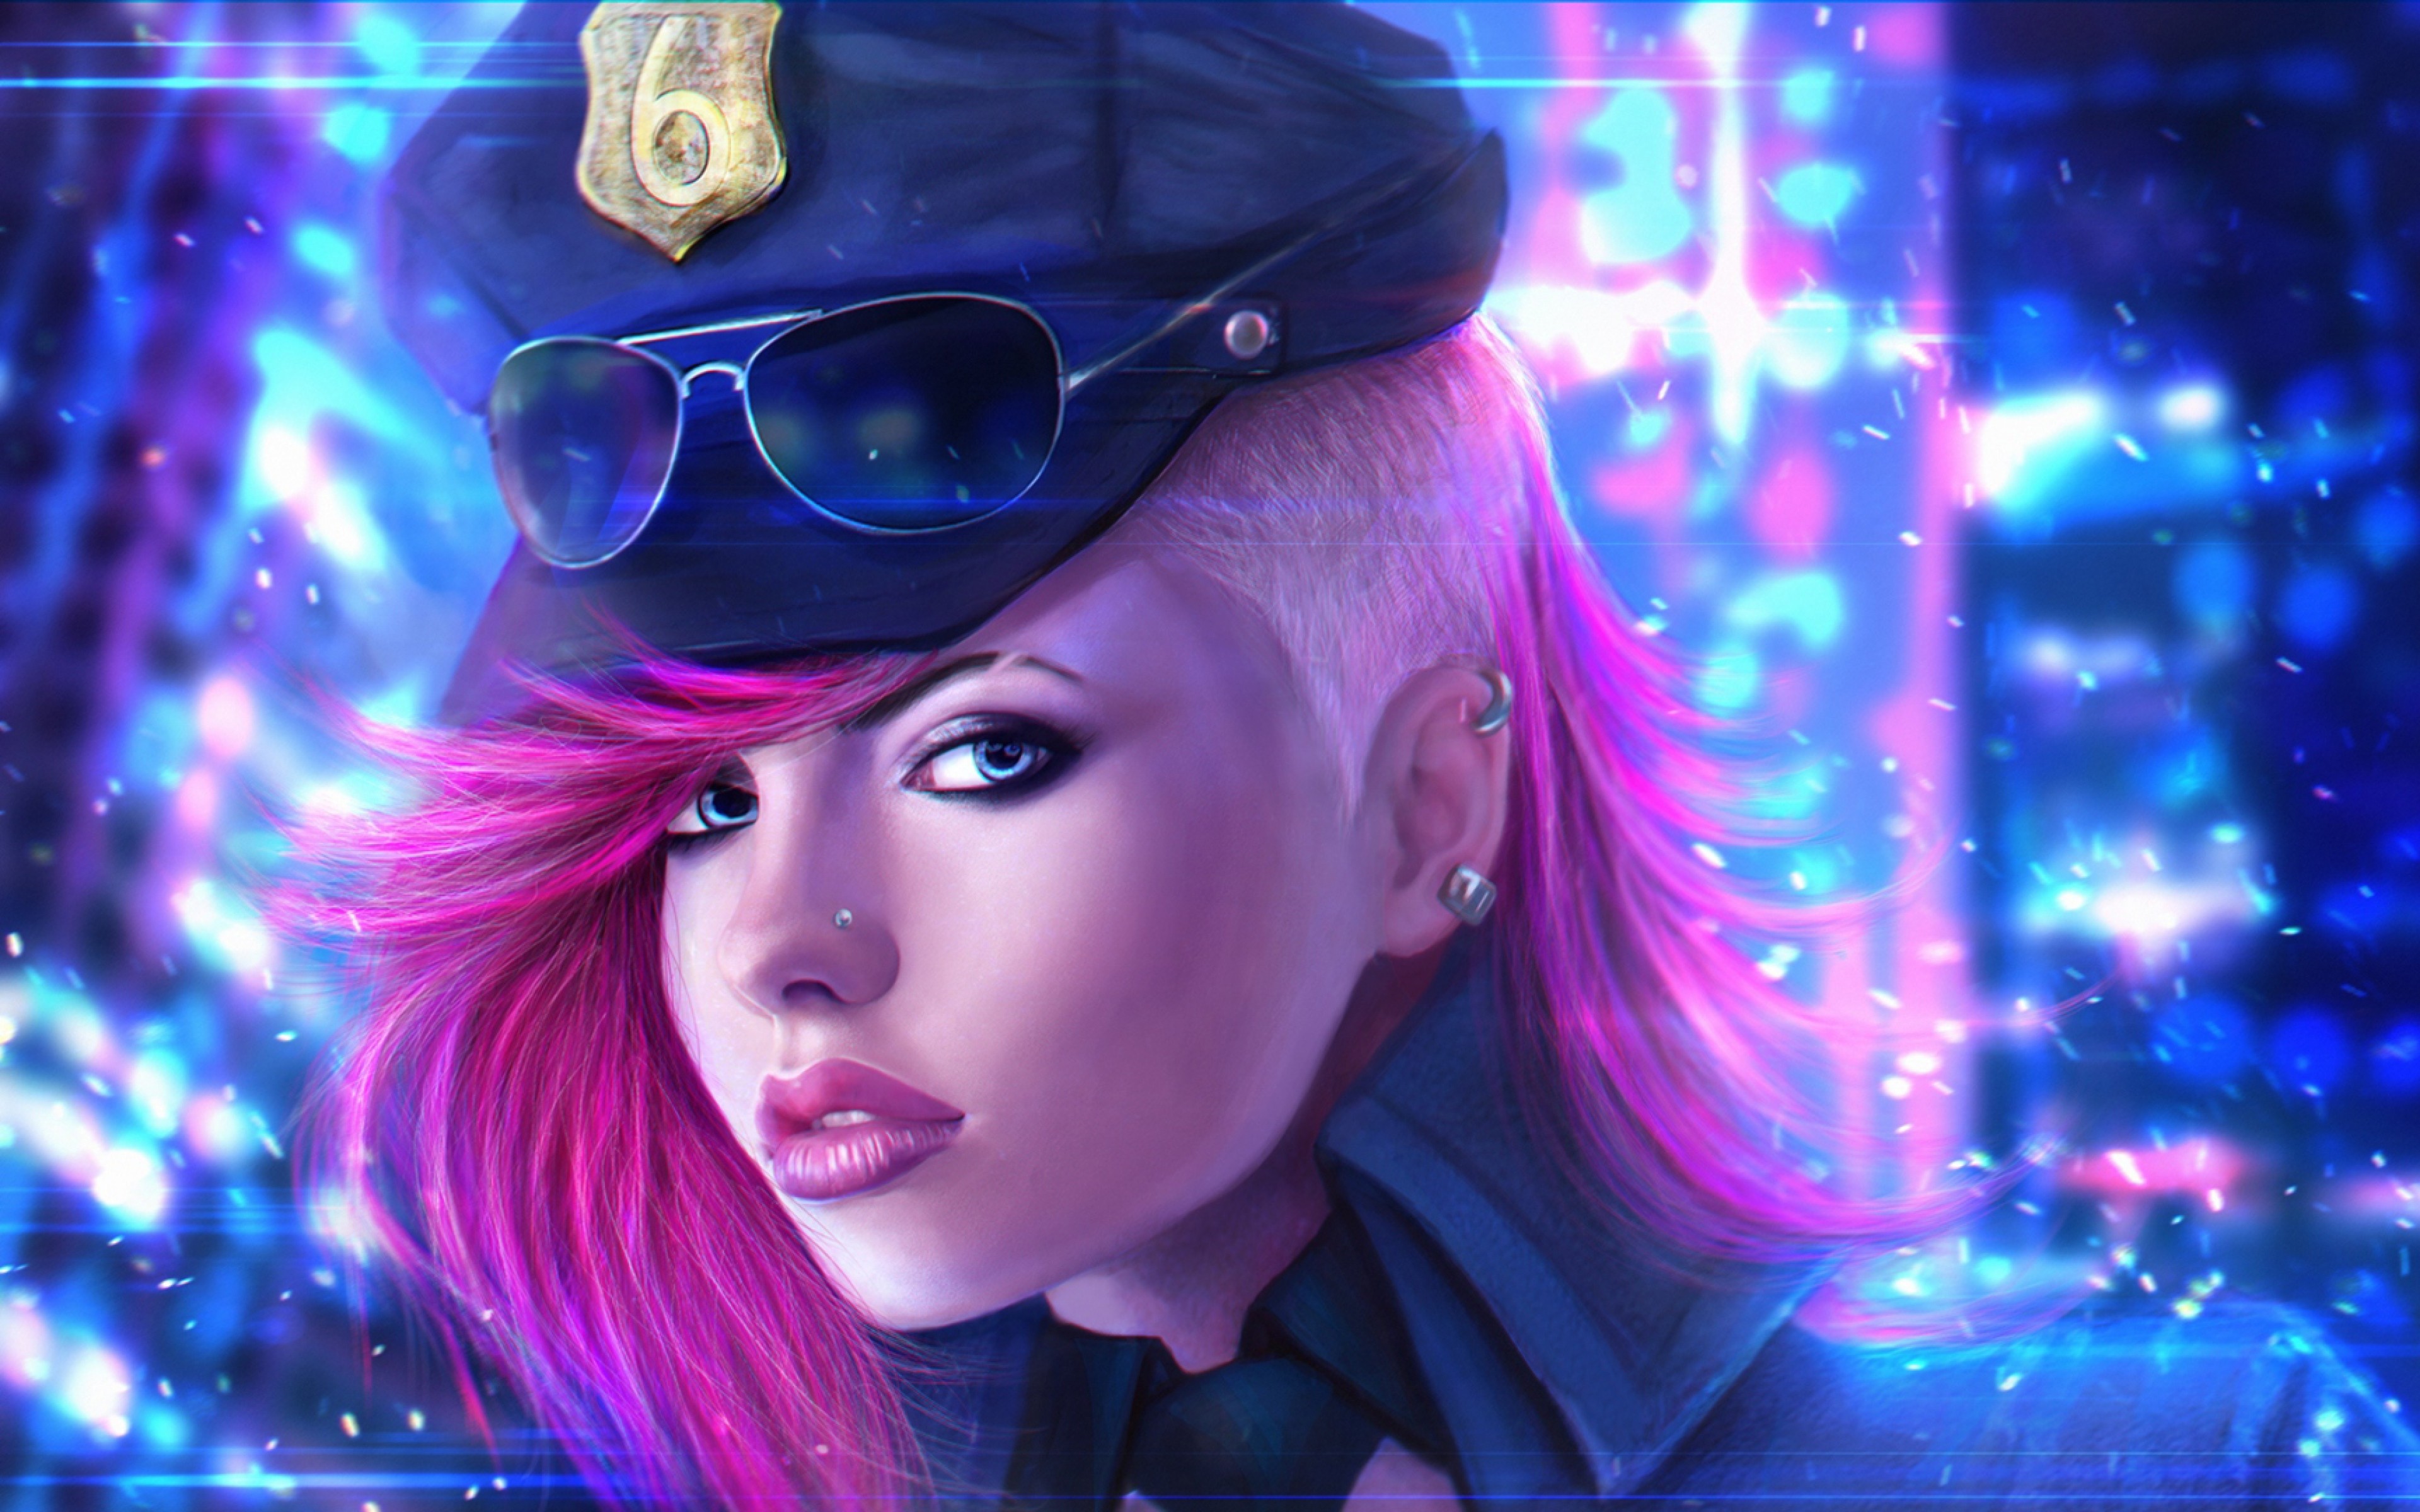 General 3840x2400 League of Legends fantasy girl pink hair sidecut blue eyes pink lipstick PC gaming Vi (League of Legends) digital art